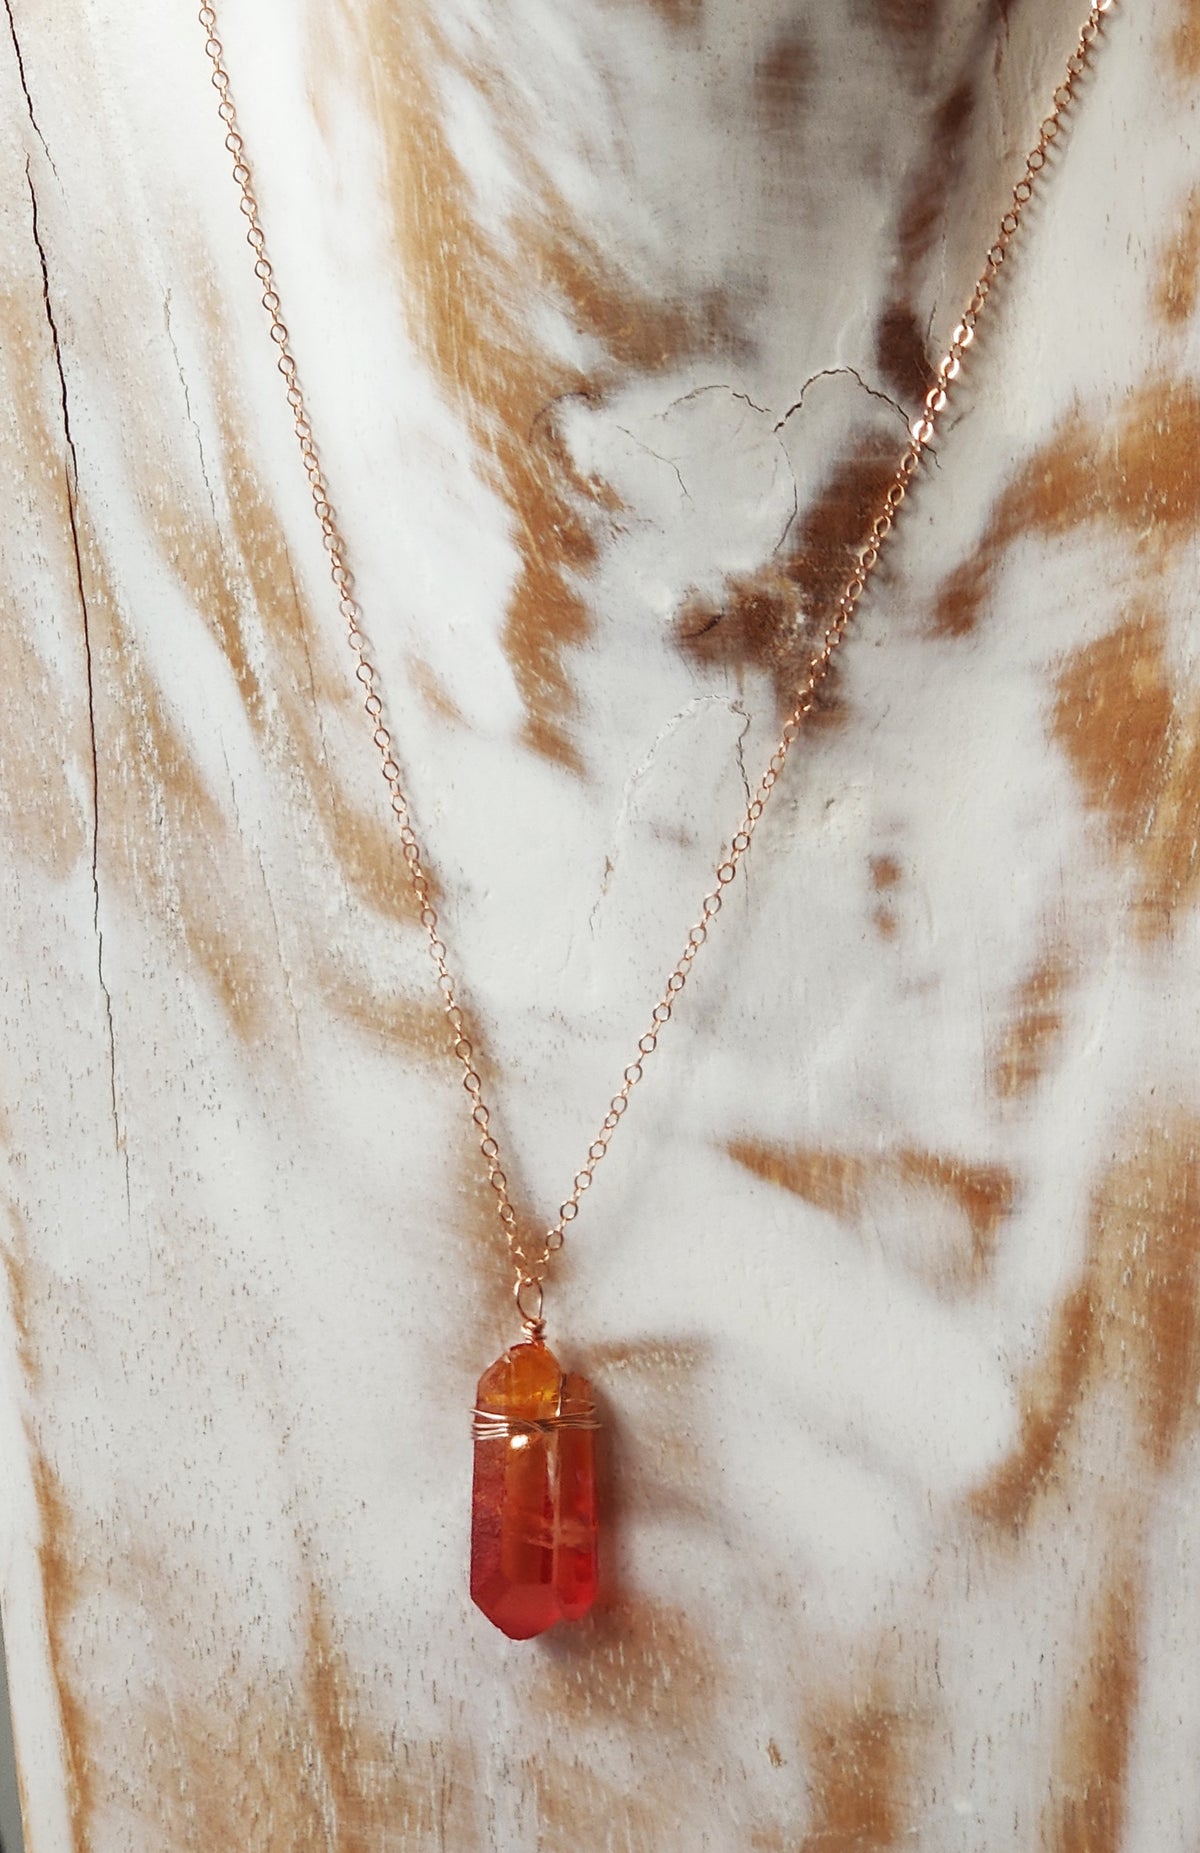 Vannucci Crystal Quartz Necklace in Rose Gold - Orange/Red